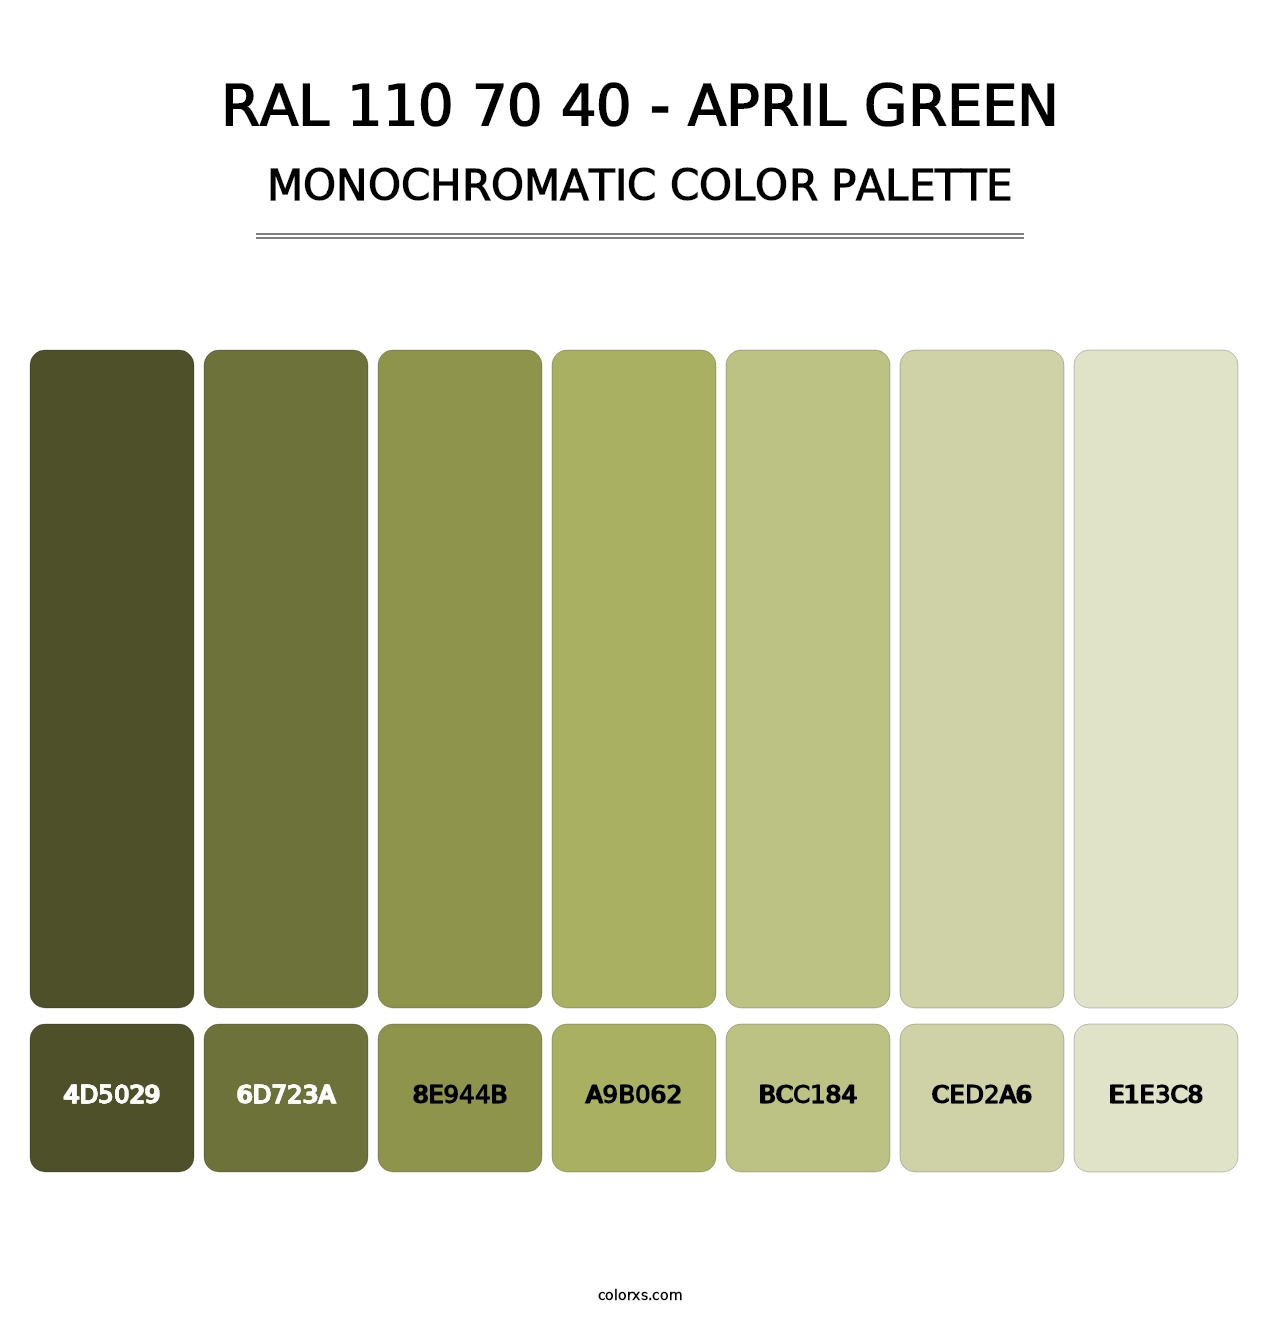 RAL 110 70 40 - April Green - Monochromatic Color Palette